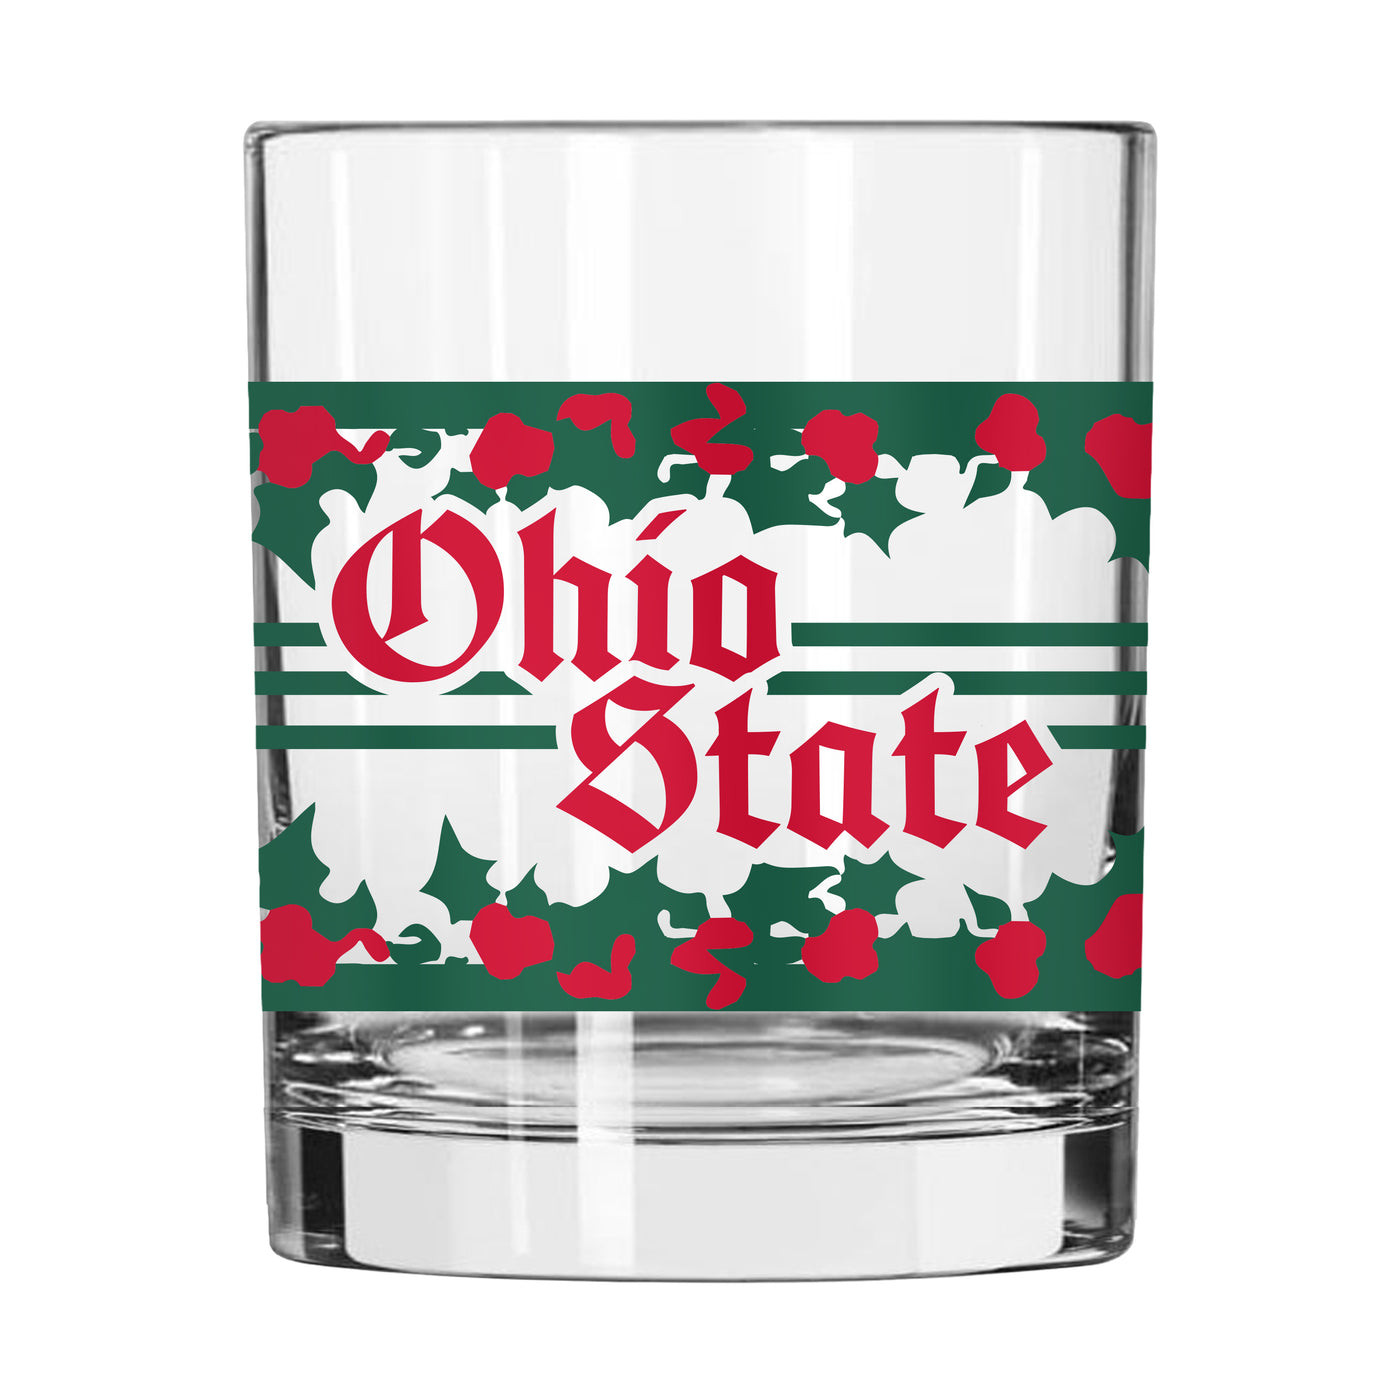 Ohio State 14oz Holiday Rocks Glass